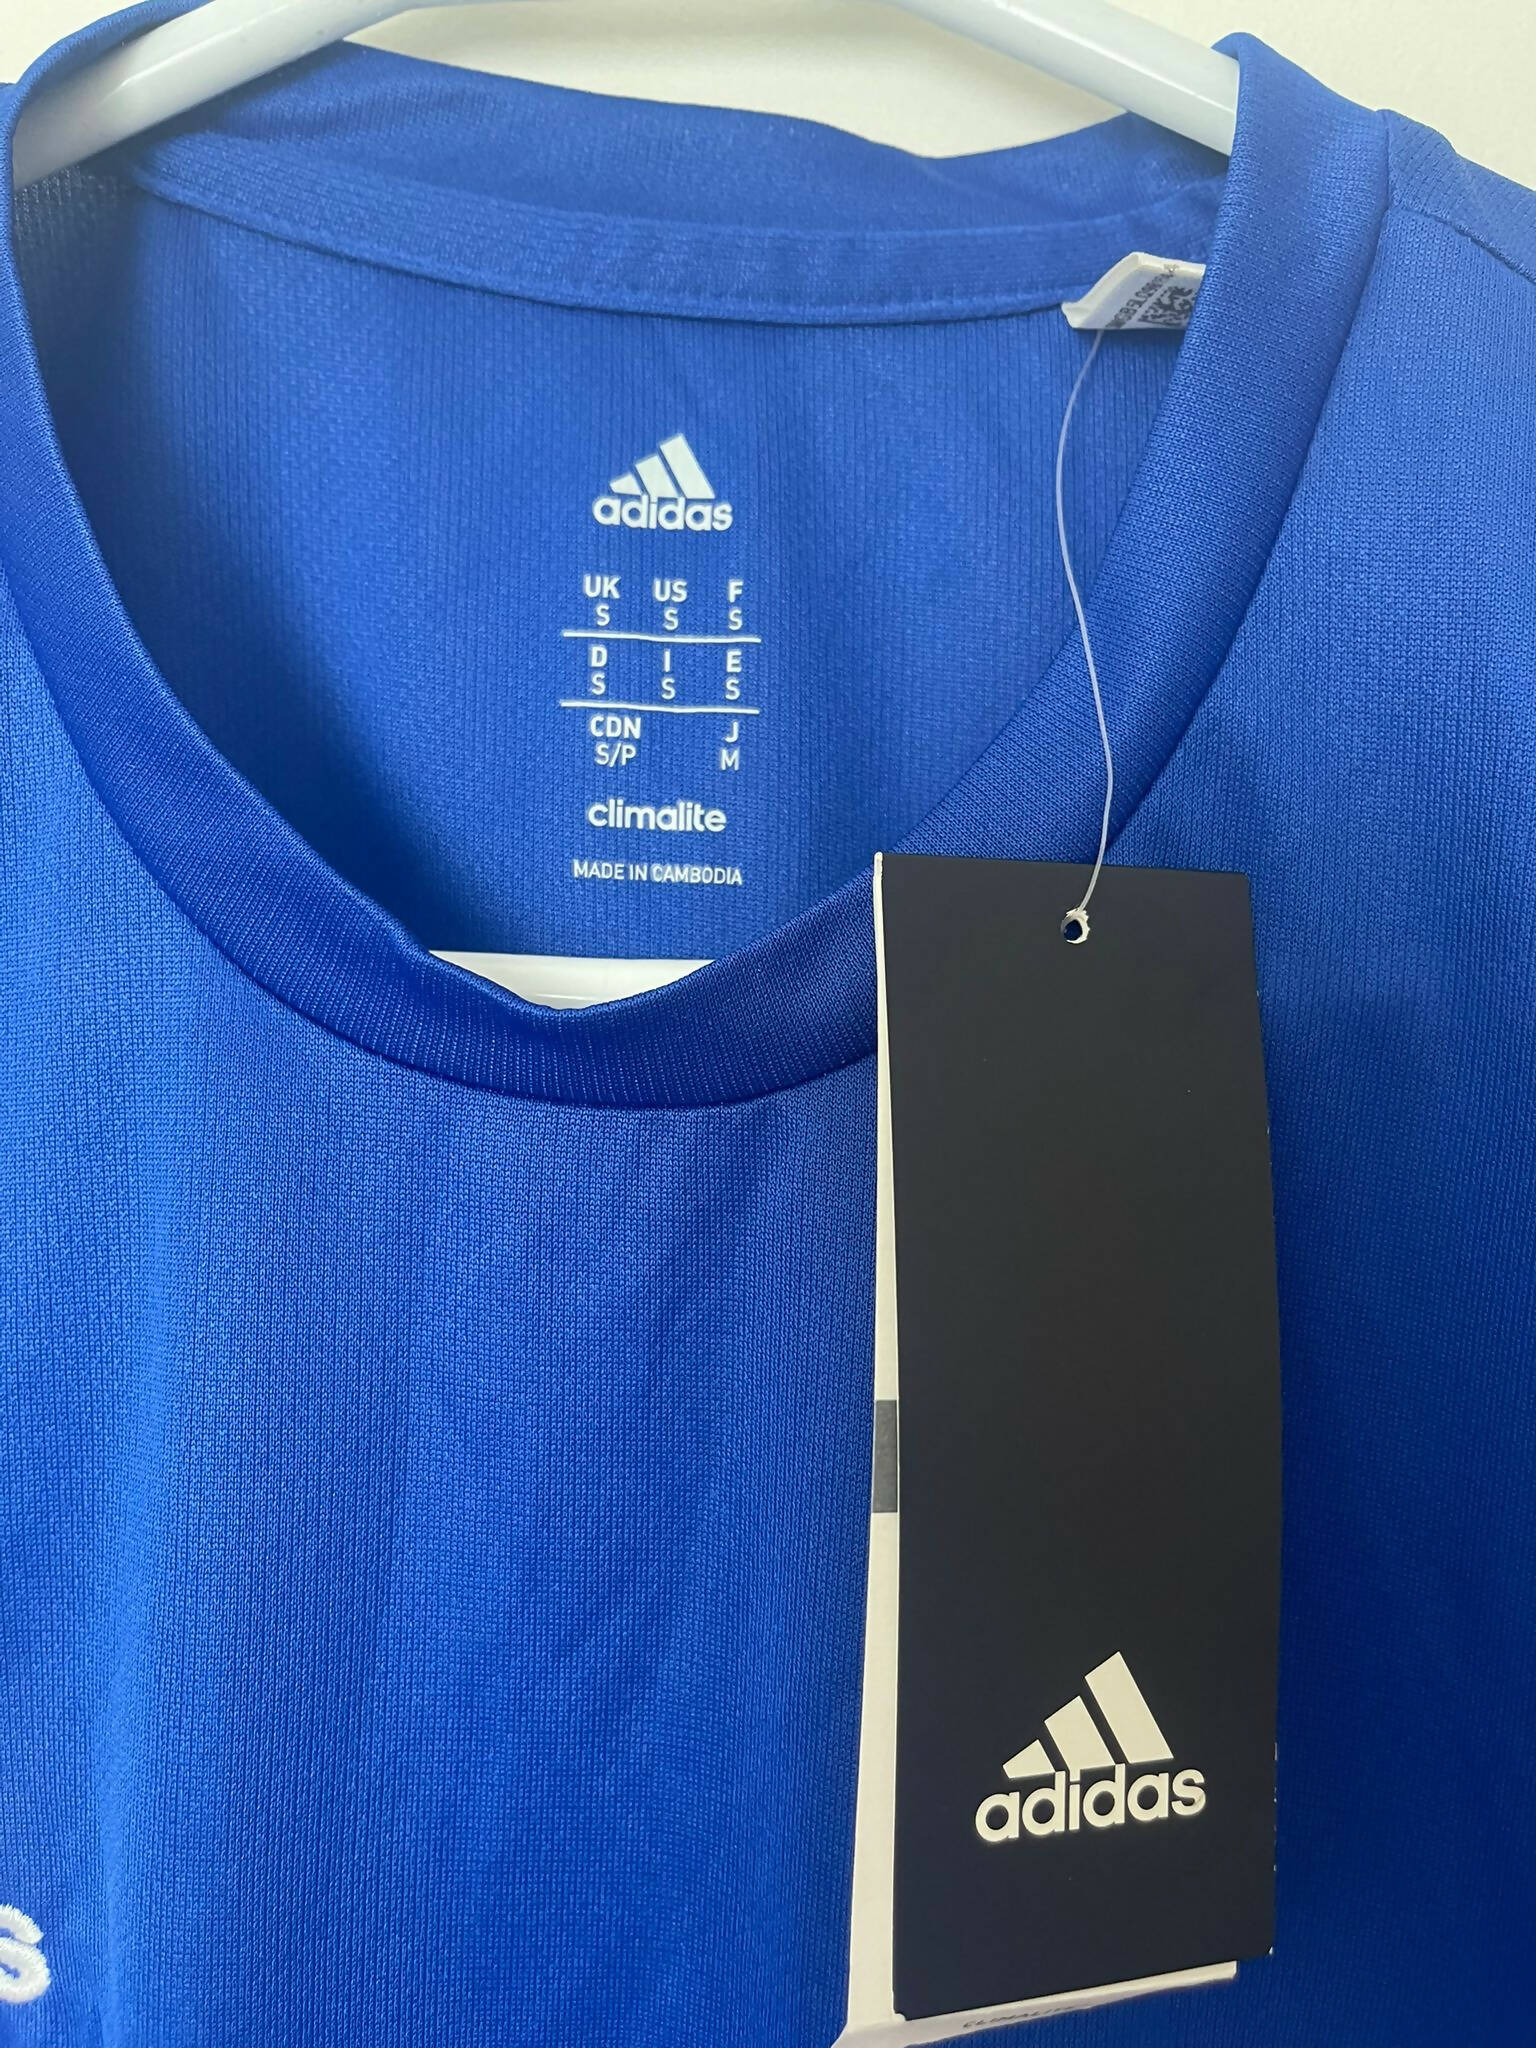 Adidas | Blue Shirt (Small) | Men T-Shirts & Shirts | Brand New